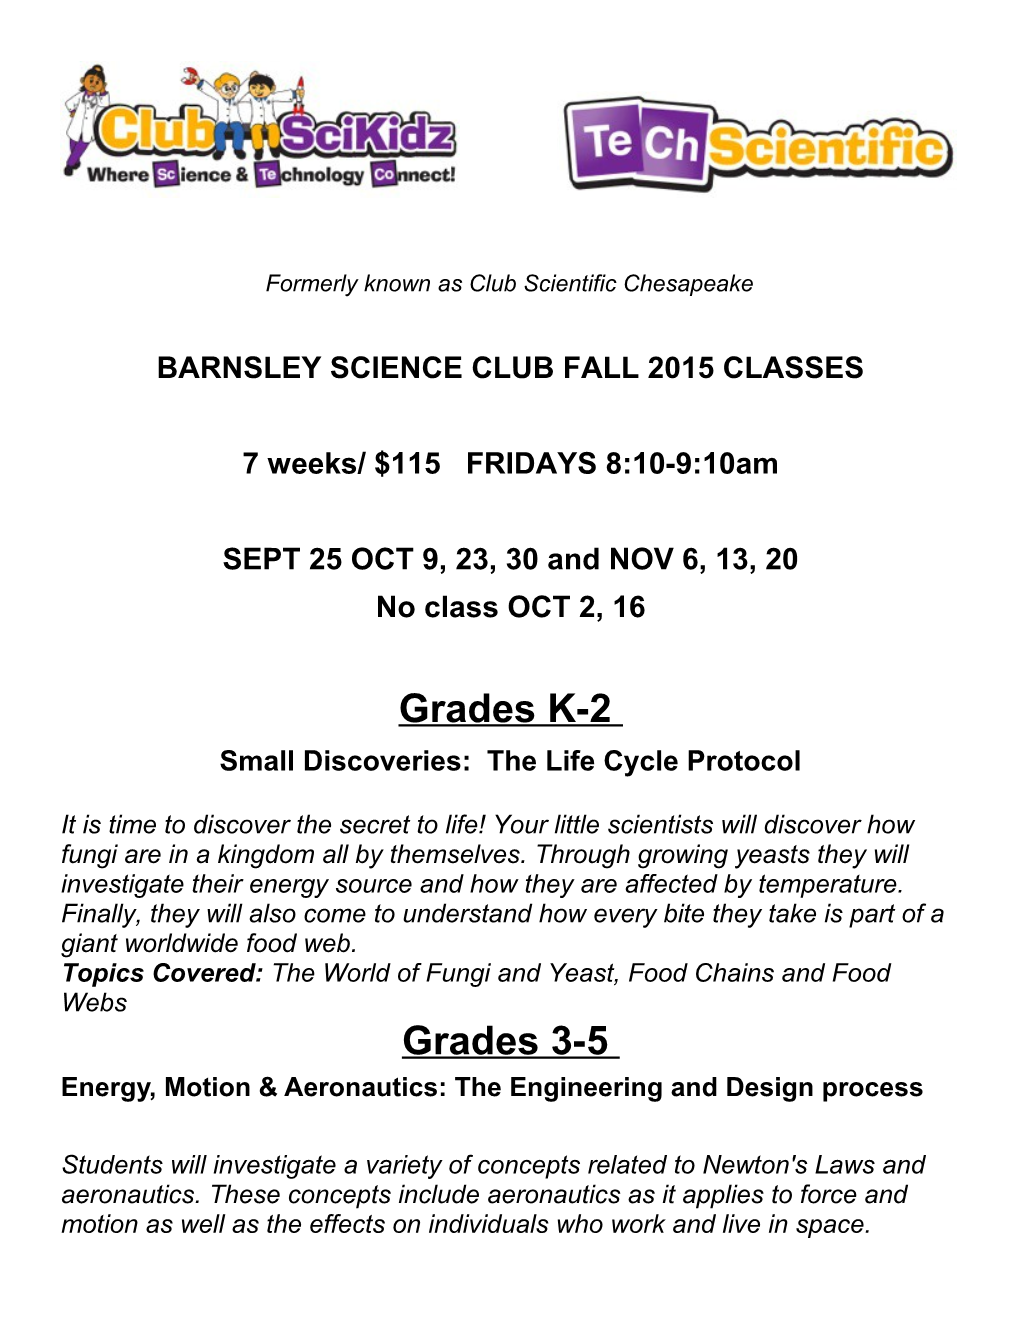 Barnsley Science Club Fall 2015 Classes